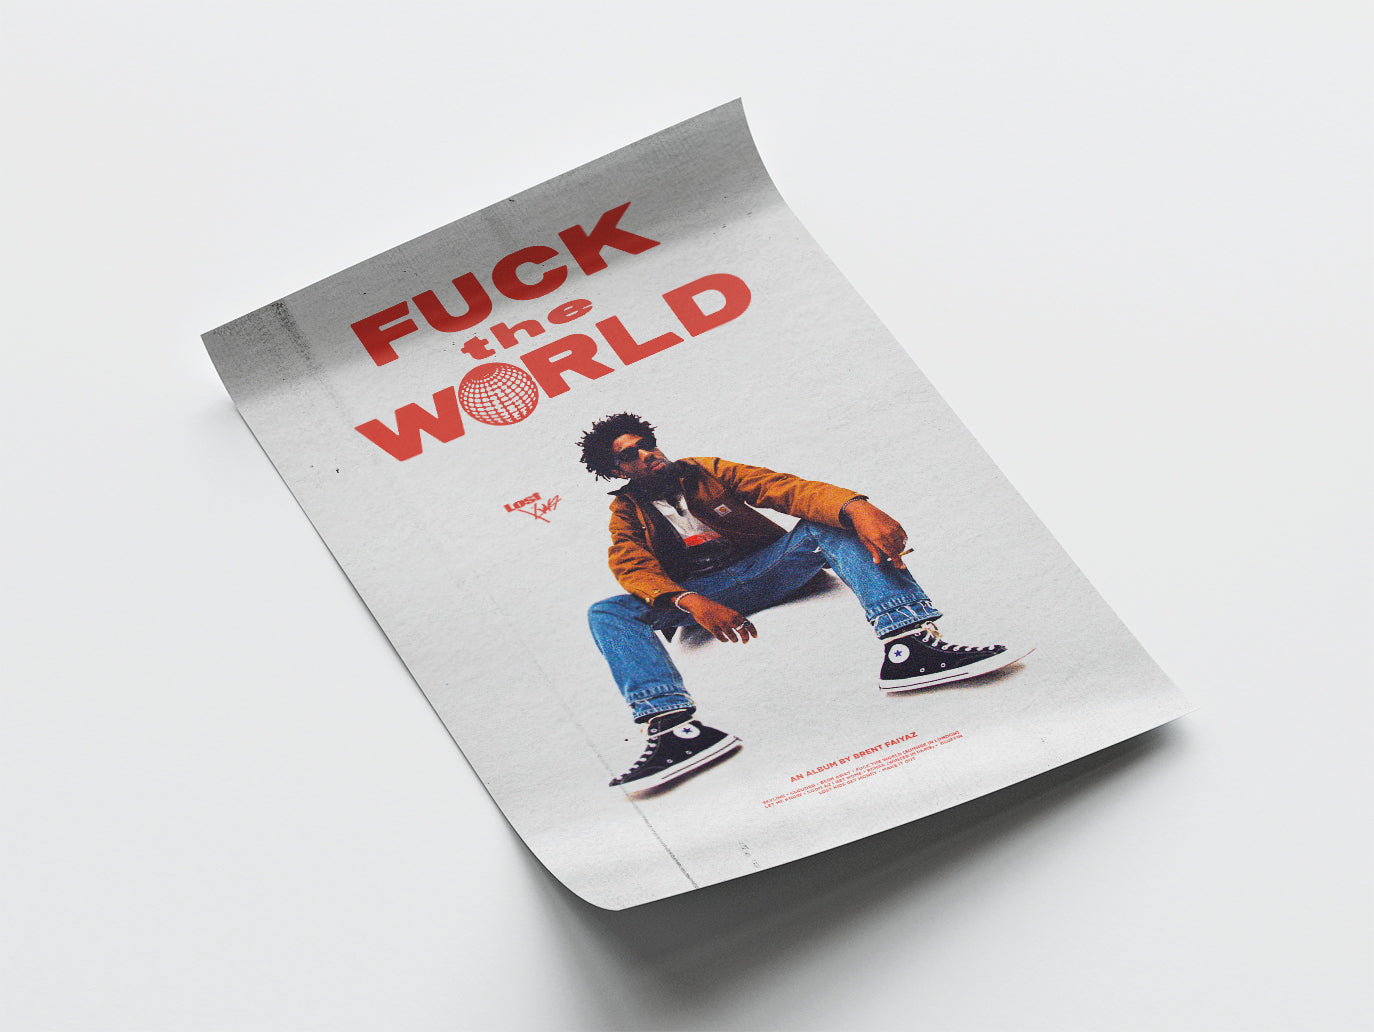 Brent Faiyaz 'Fuck The World' Poster